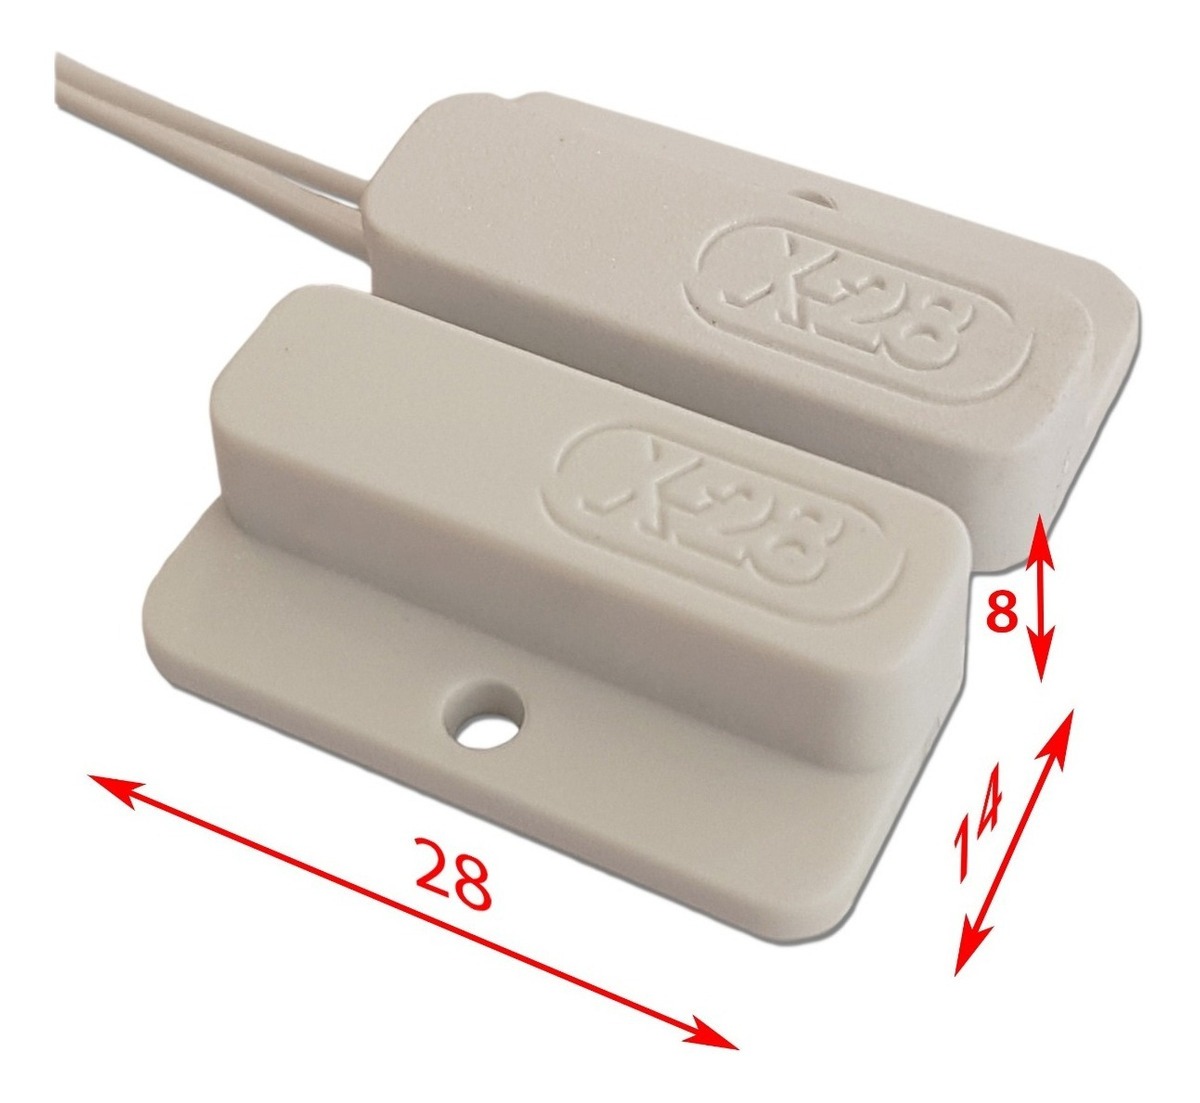 Sensor Micro Magnetico Alarma Puerta Ventana X28 Alarmas – Ottech